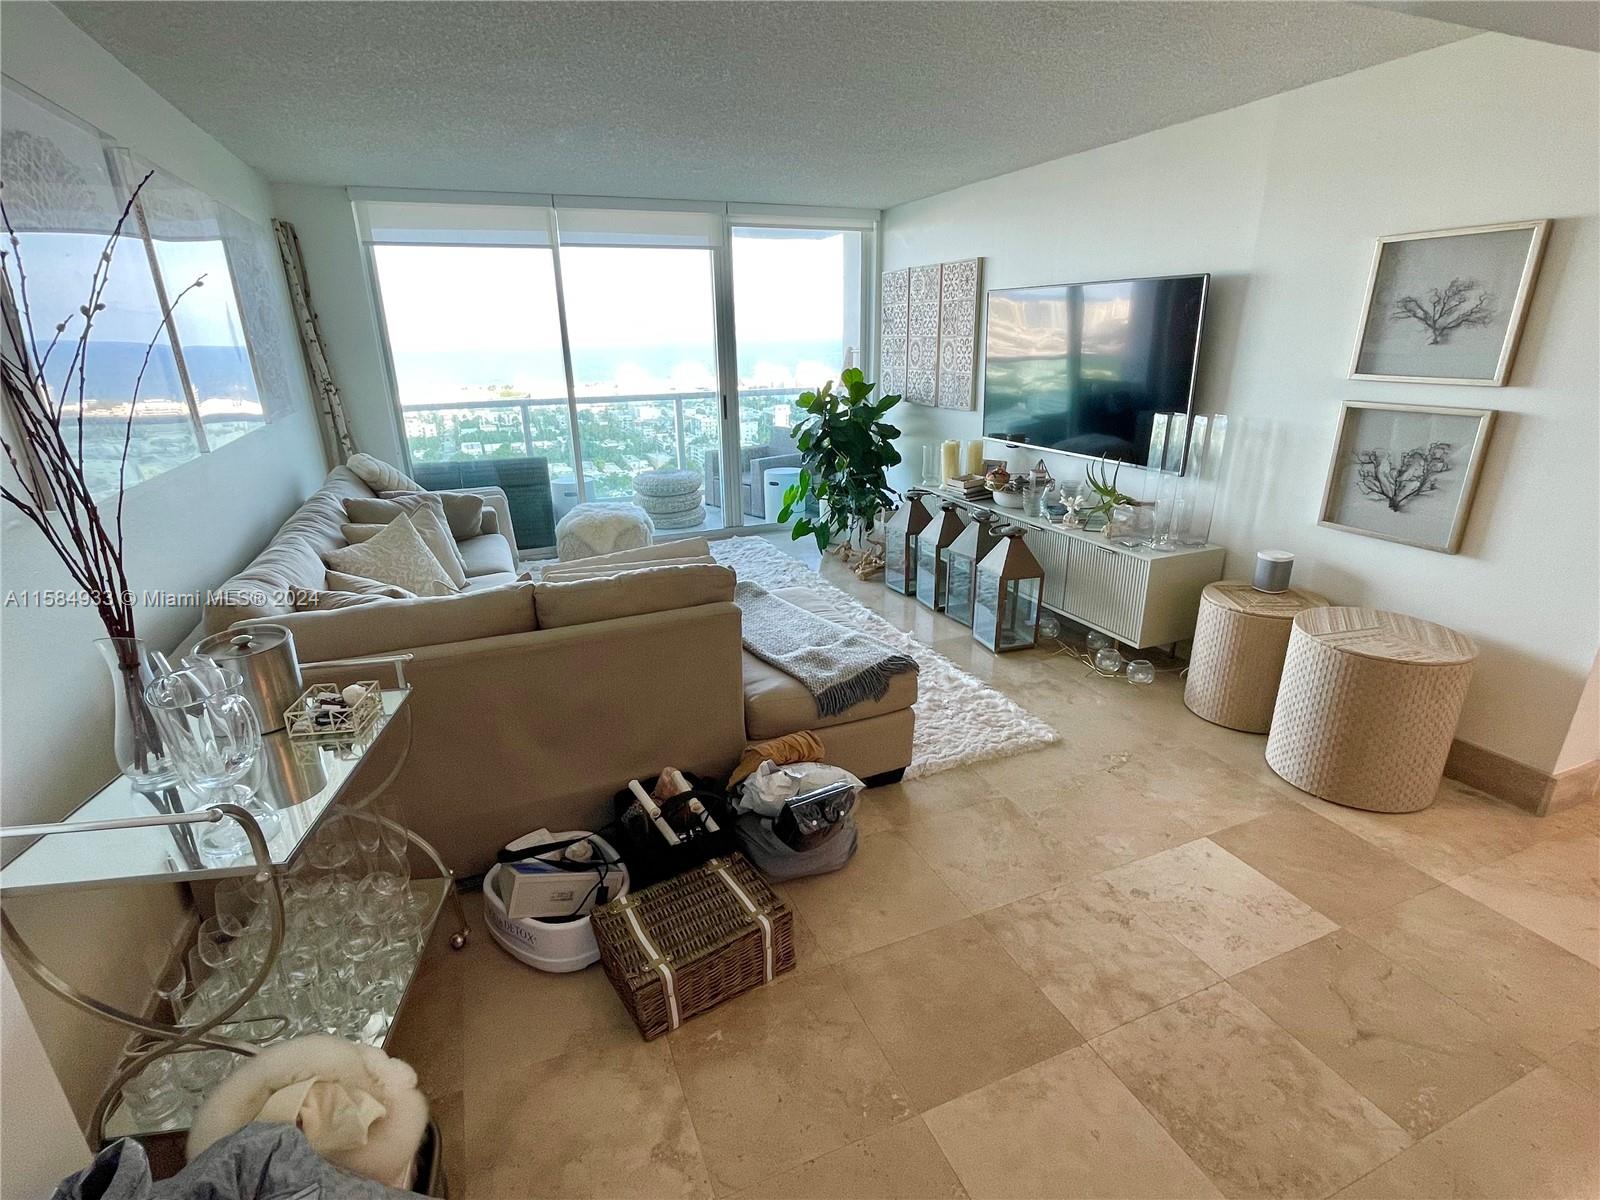 Rental Property at 650 West Ave 3006, Miami Beach, Miami-Dade County, Florida - Bedrooms: 1 
Bathrooms: 1  - $3,550 MO.